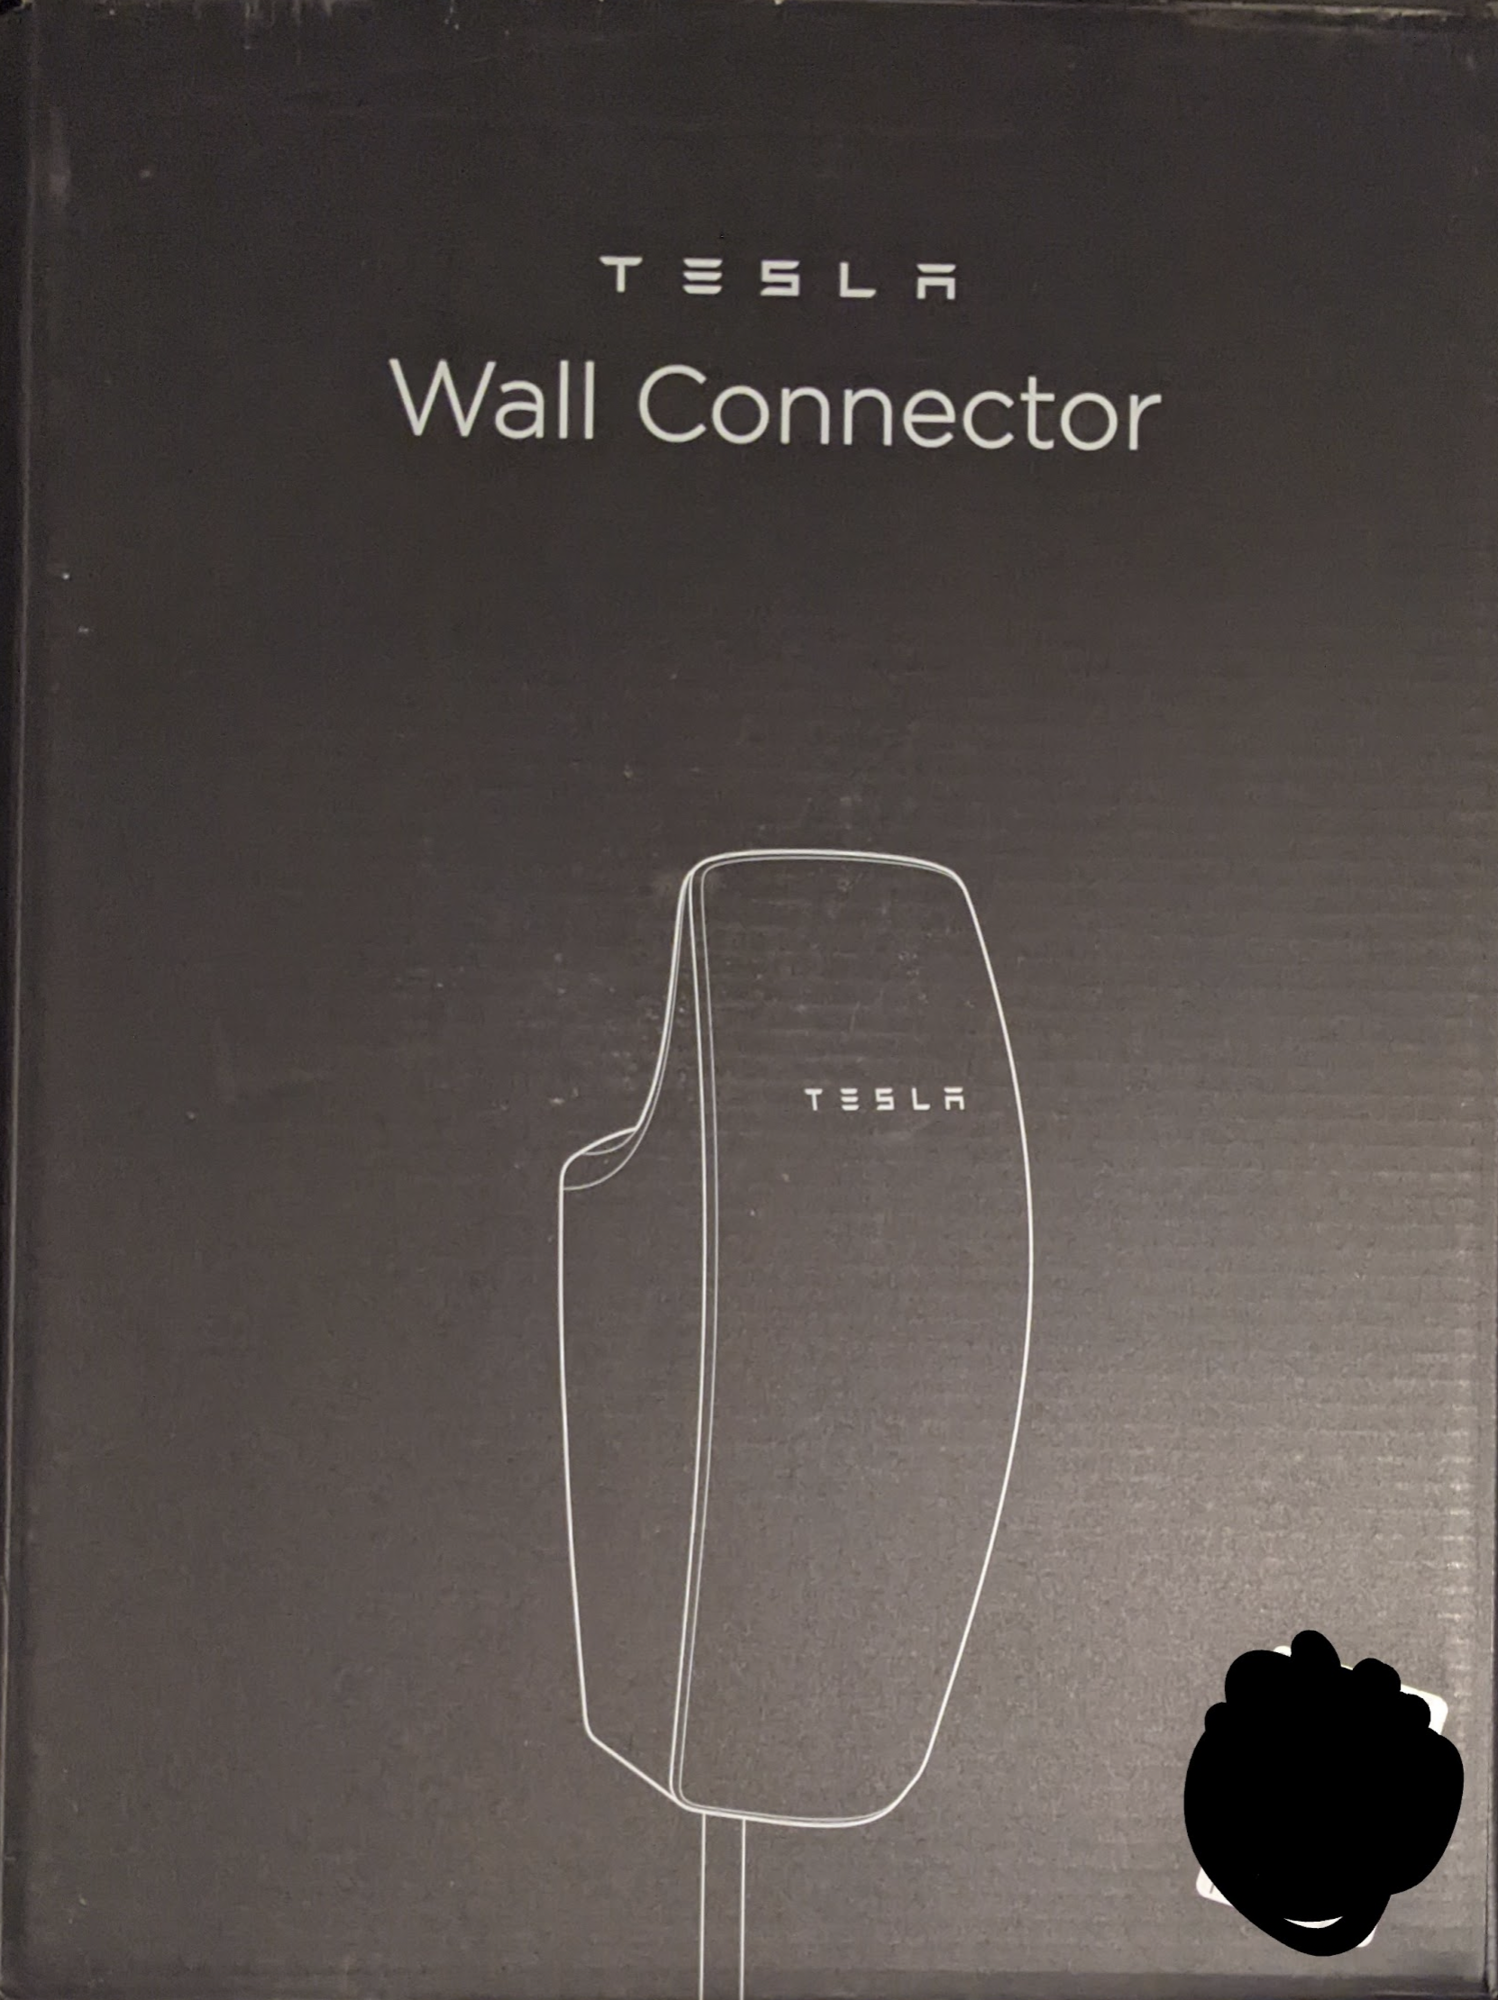 Tesla Wall Connector: Gen 2 VS Gen 3